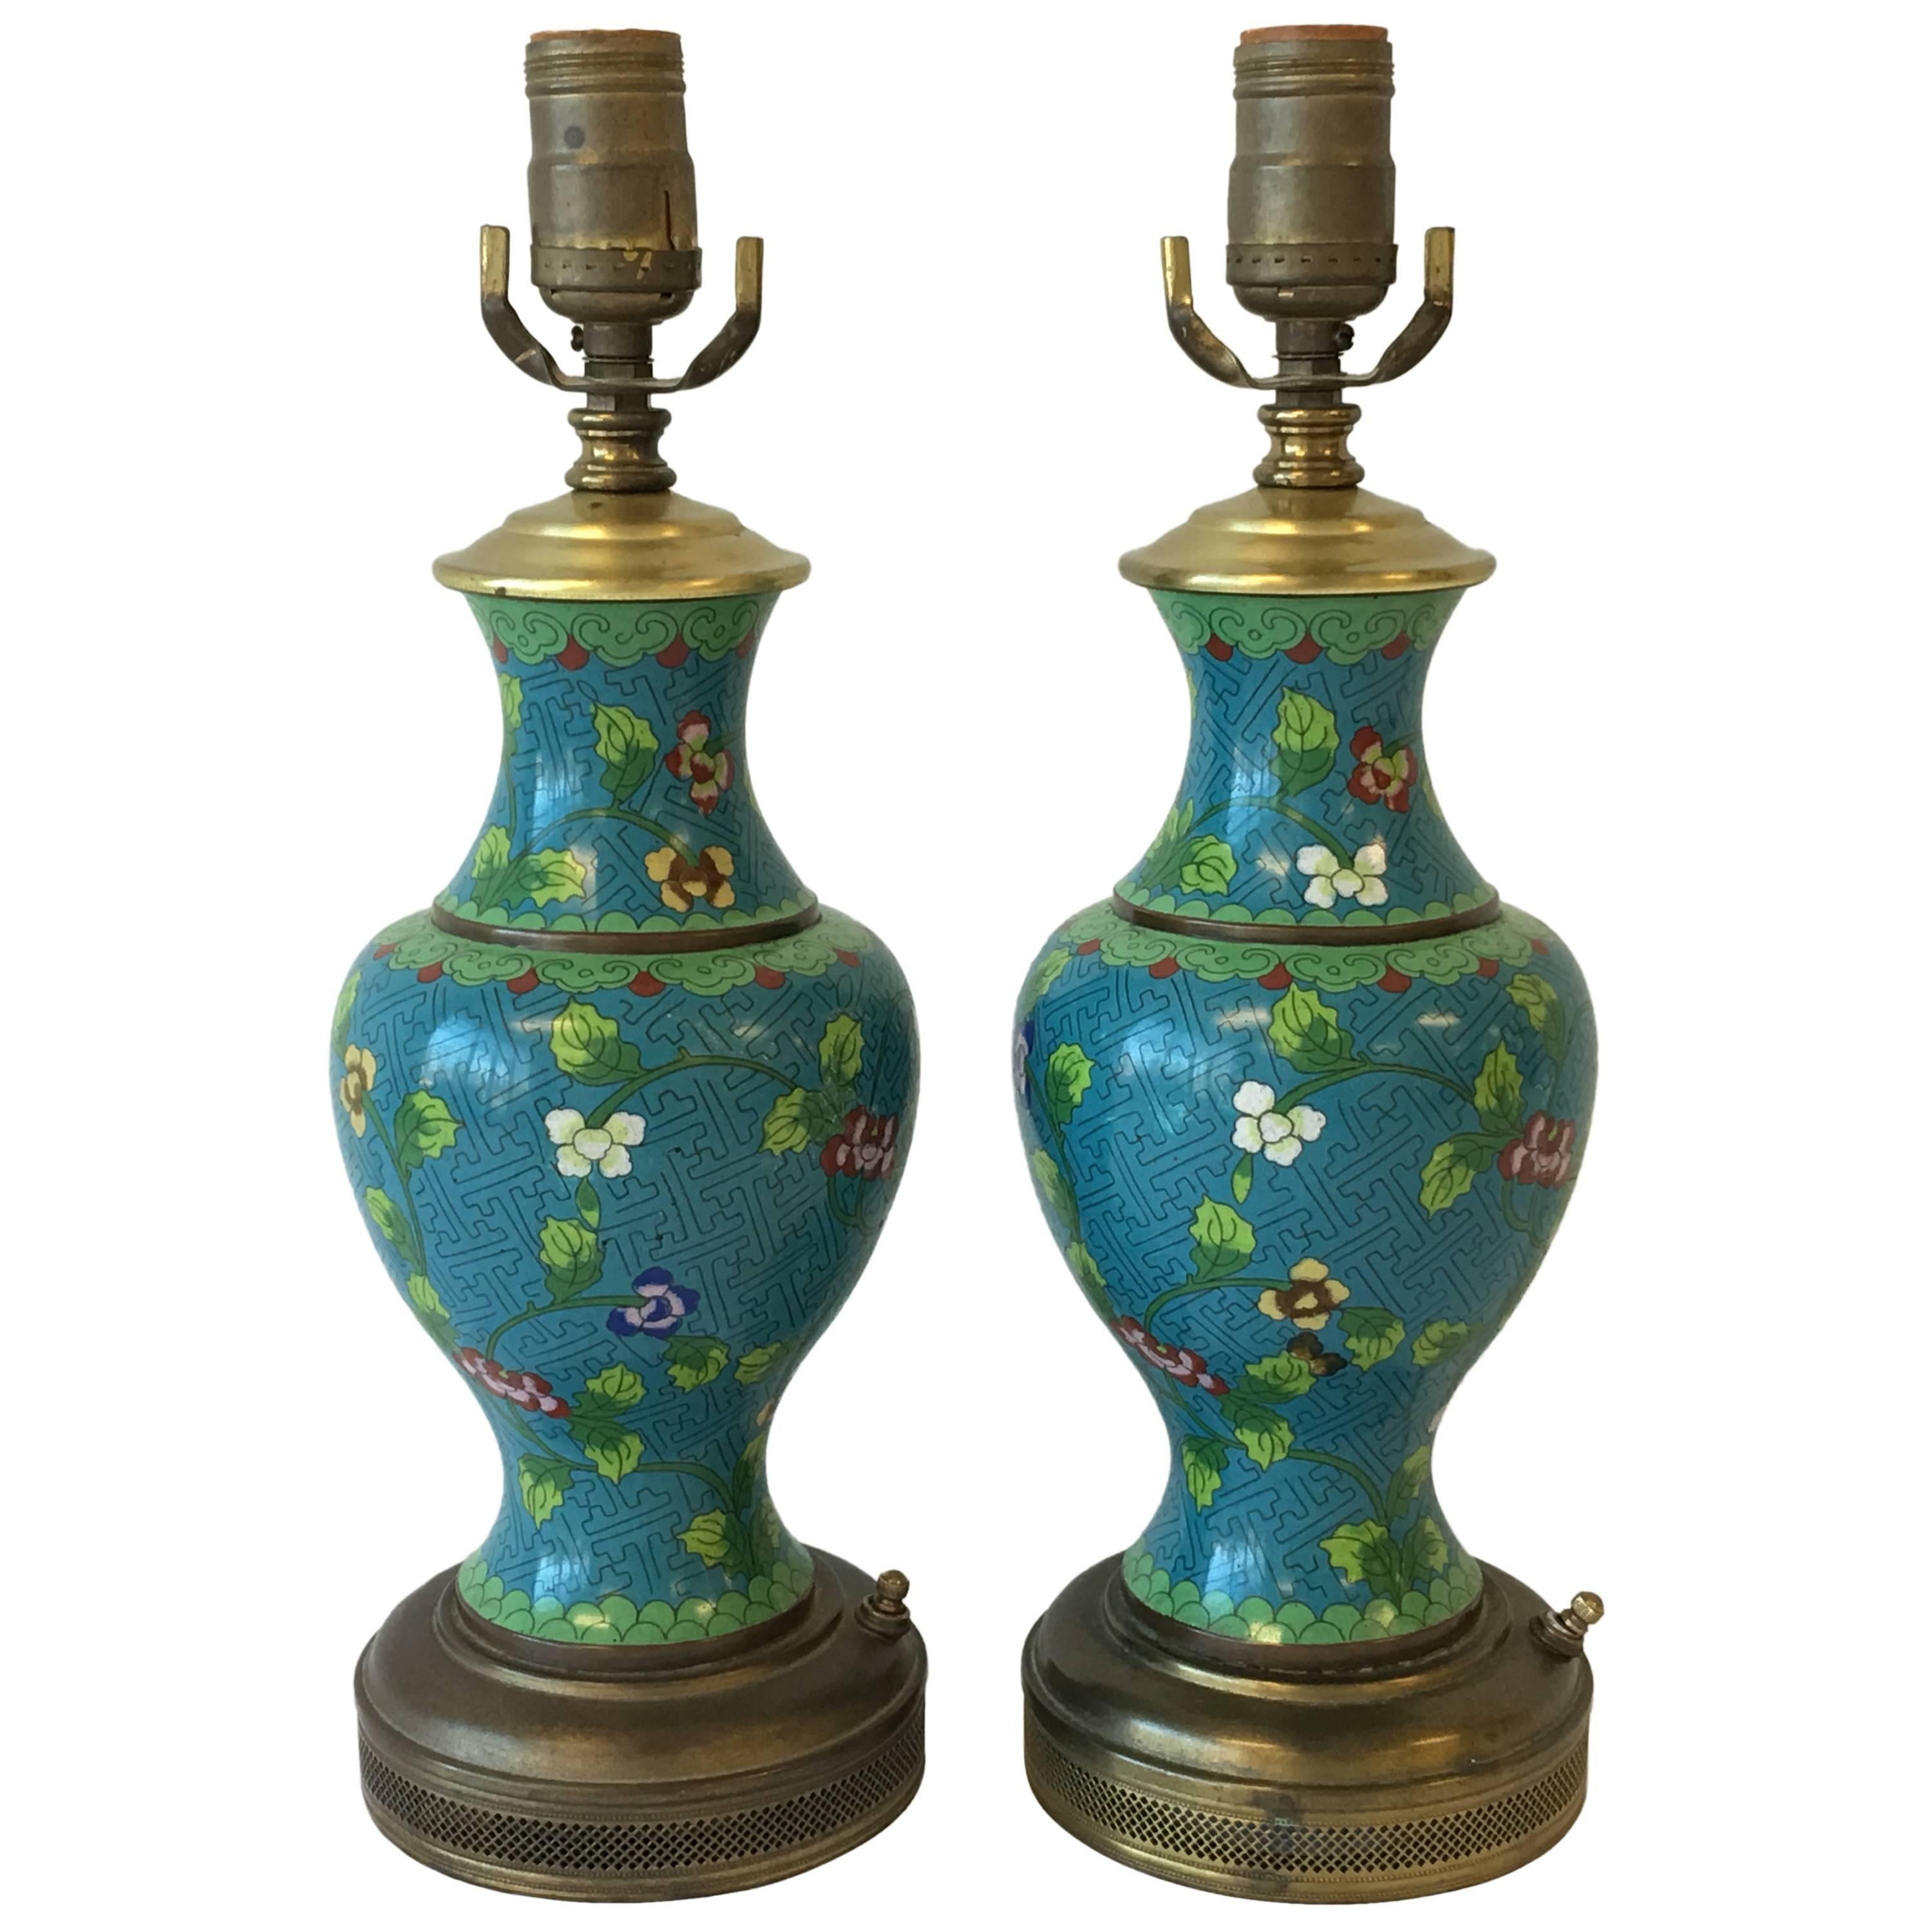 Pair of 19th Century Cloisonné with Floral Motif Lamps